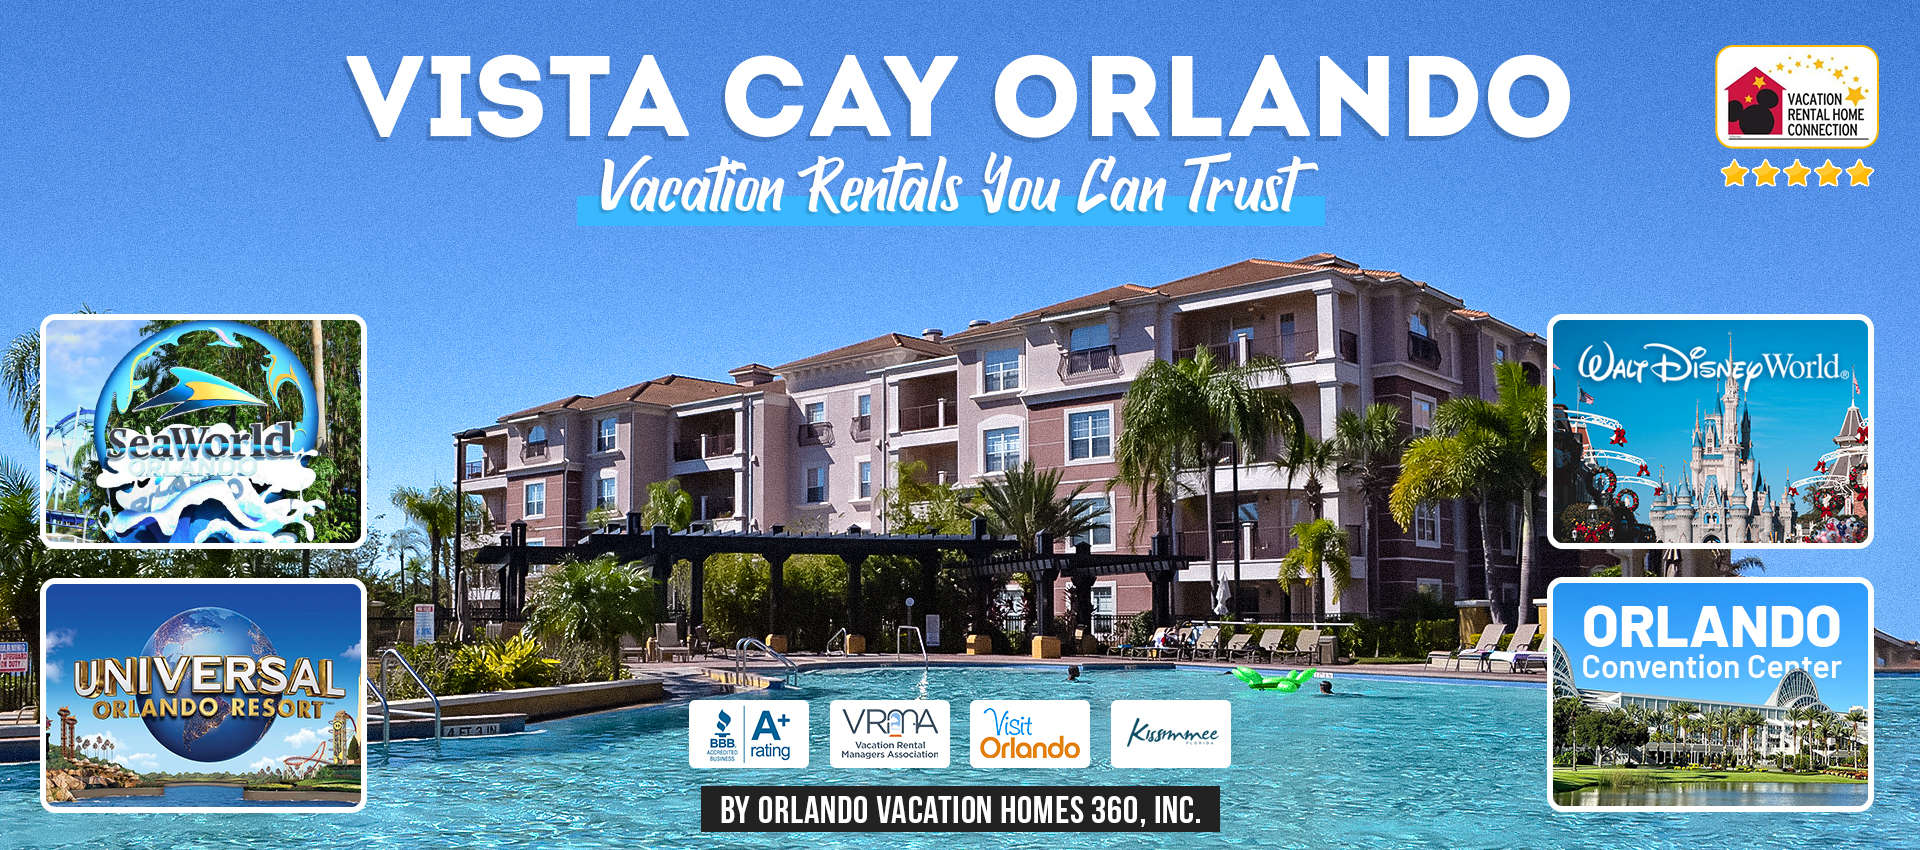 Orlando Vacation Homes, Orlando Vacation Rentals, Disney Vacation Homes